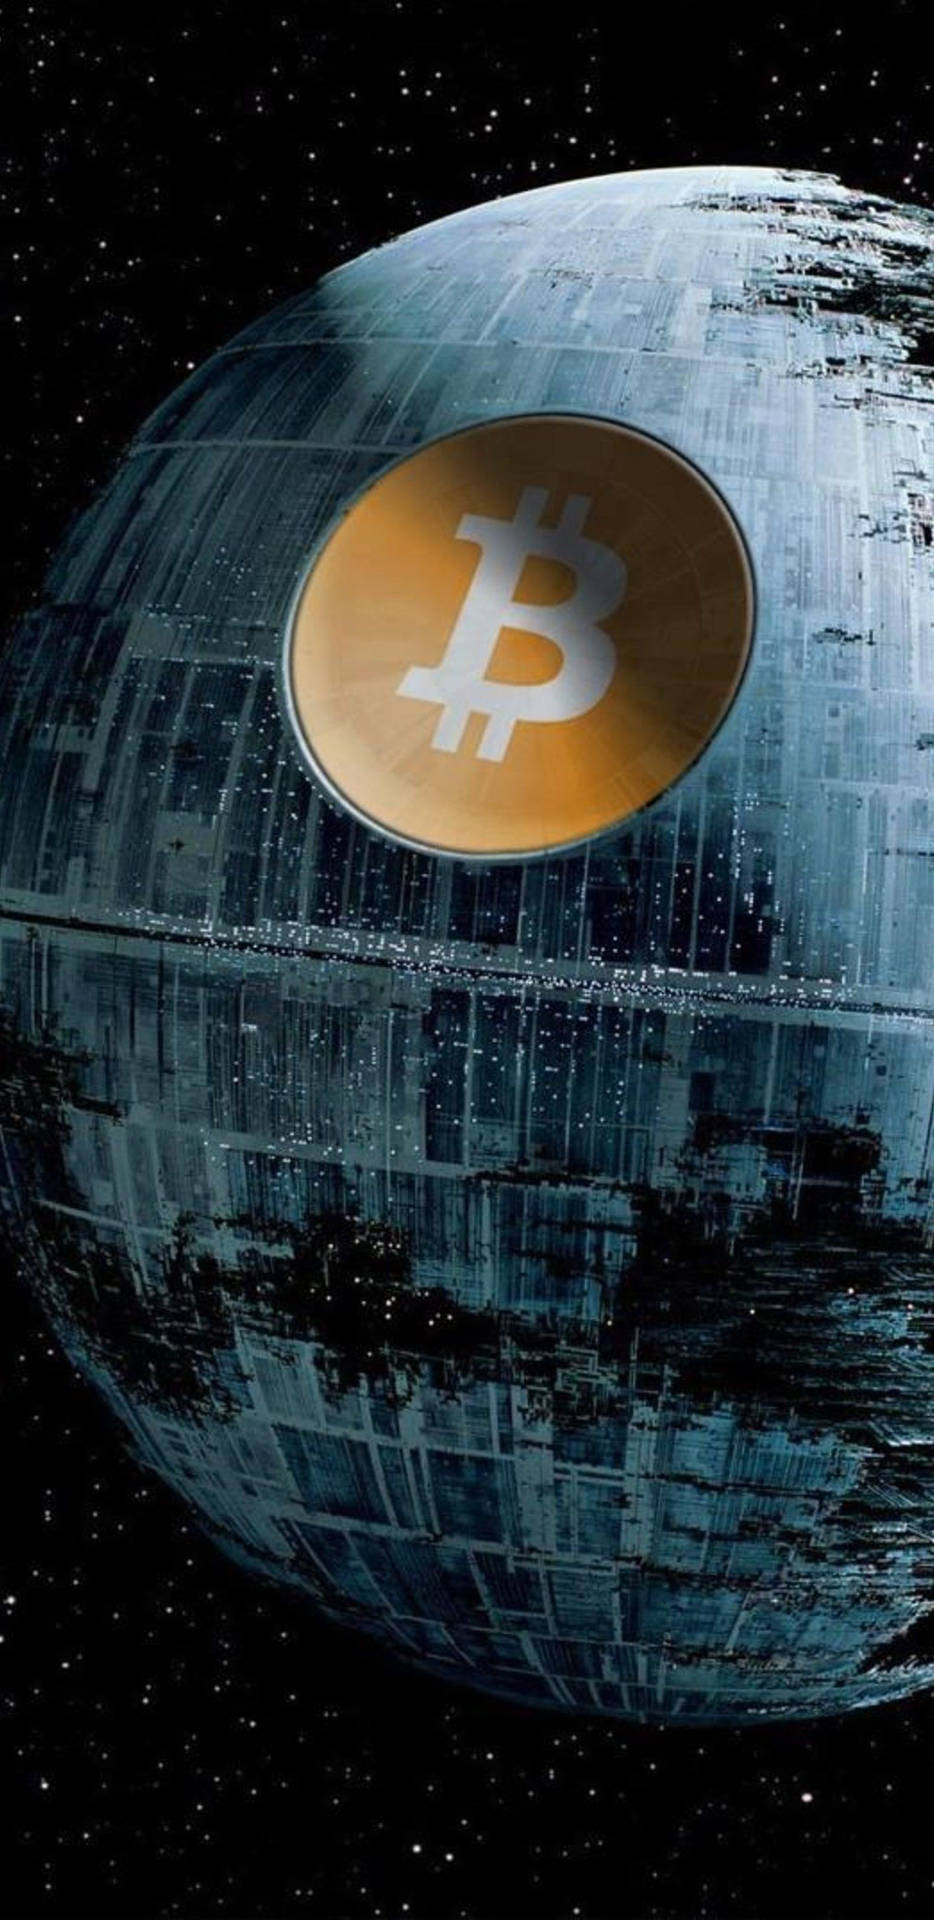 Join Blockchain’s Bitcoin Revolution Wallpaper